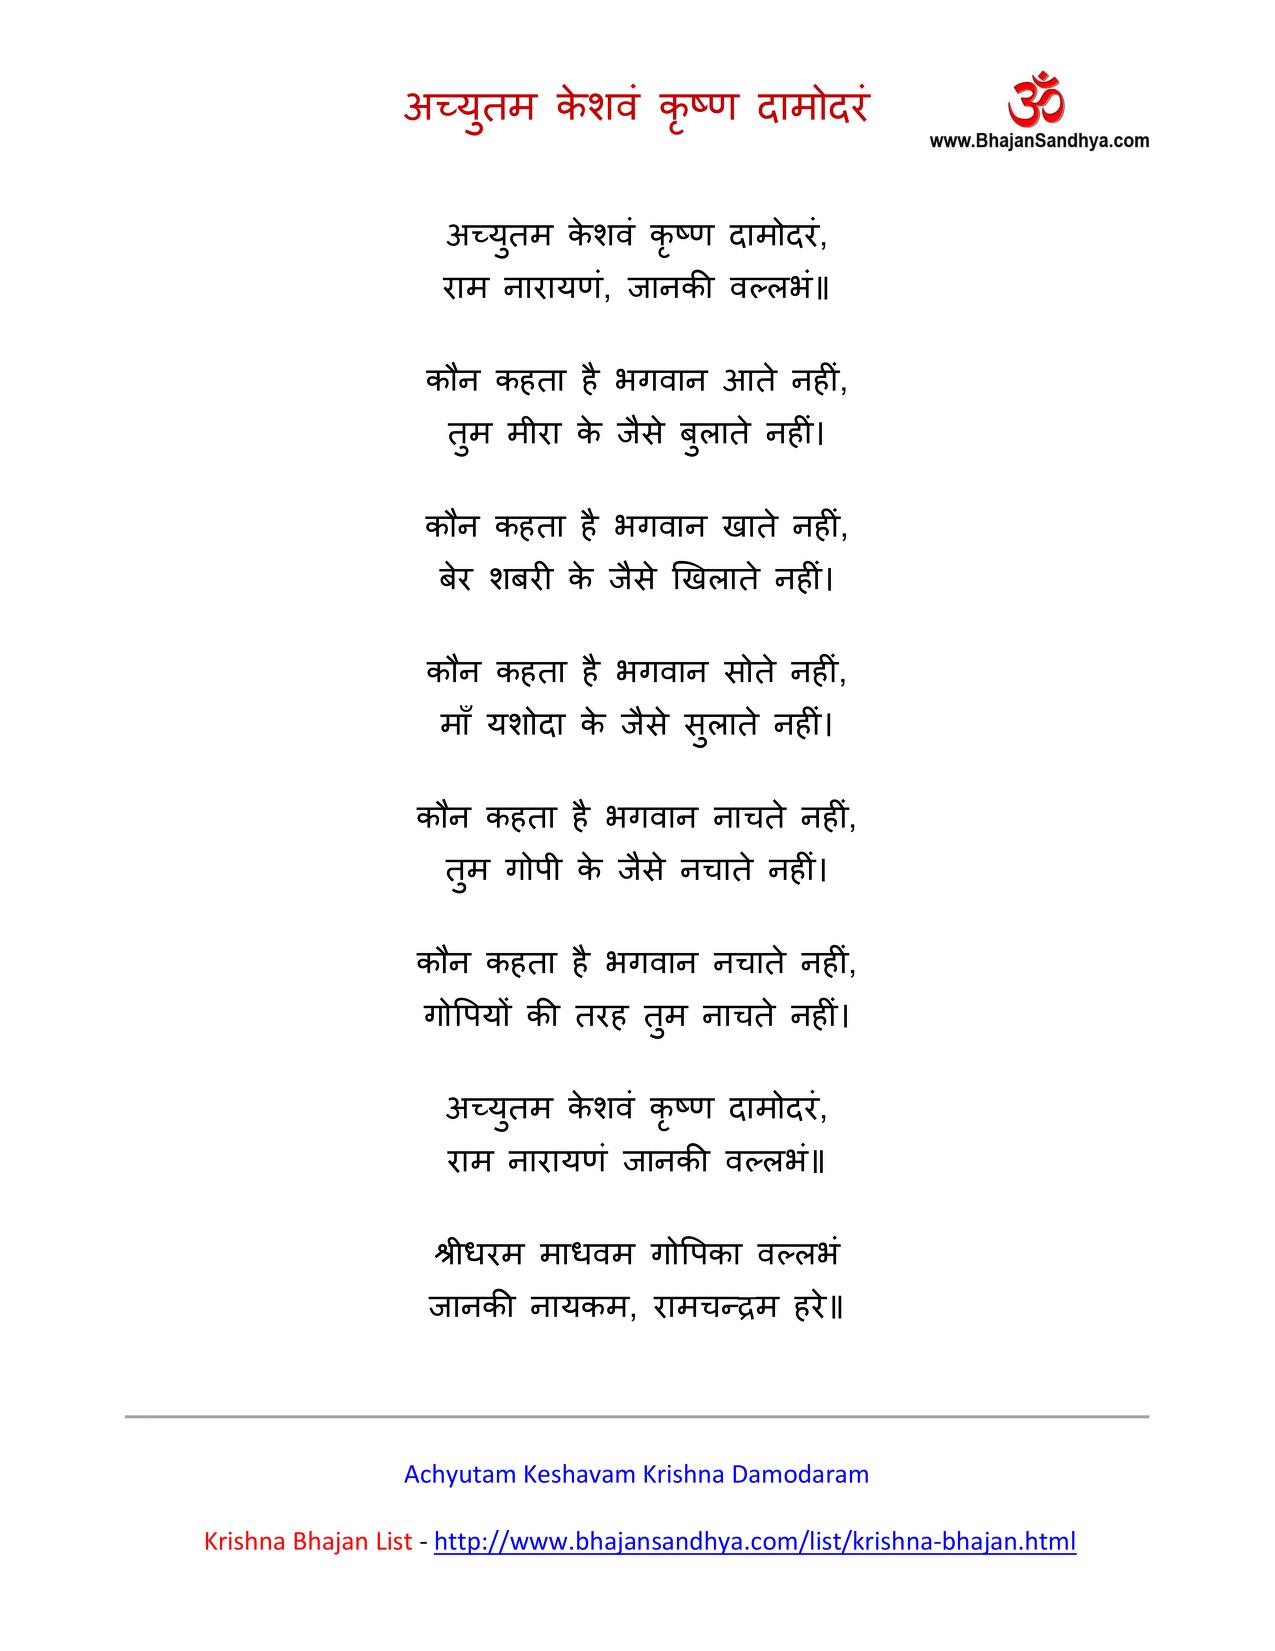 achyutam keshavam krishna damodaram pdf download